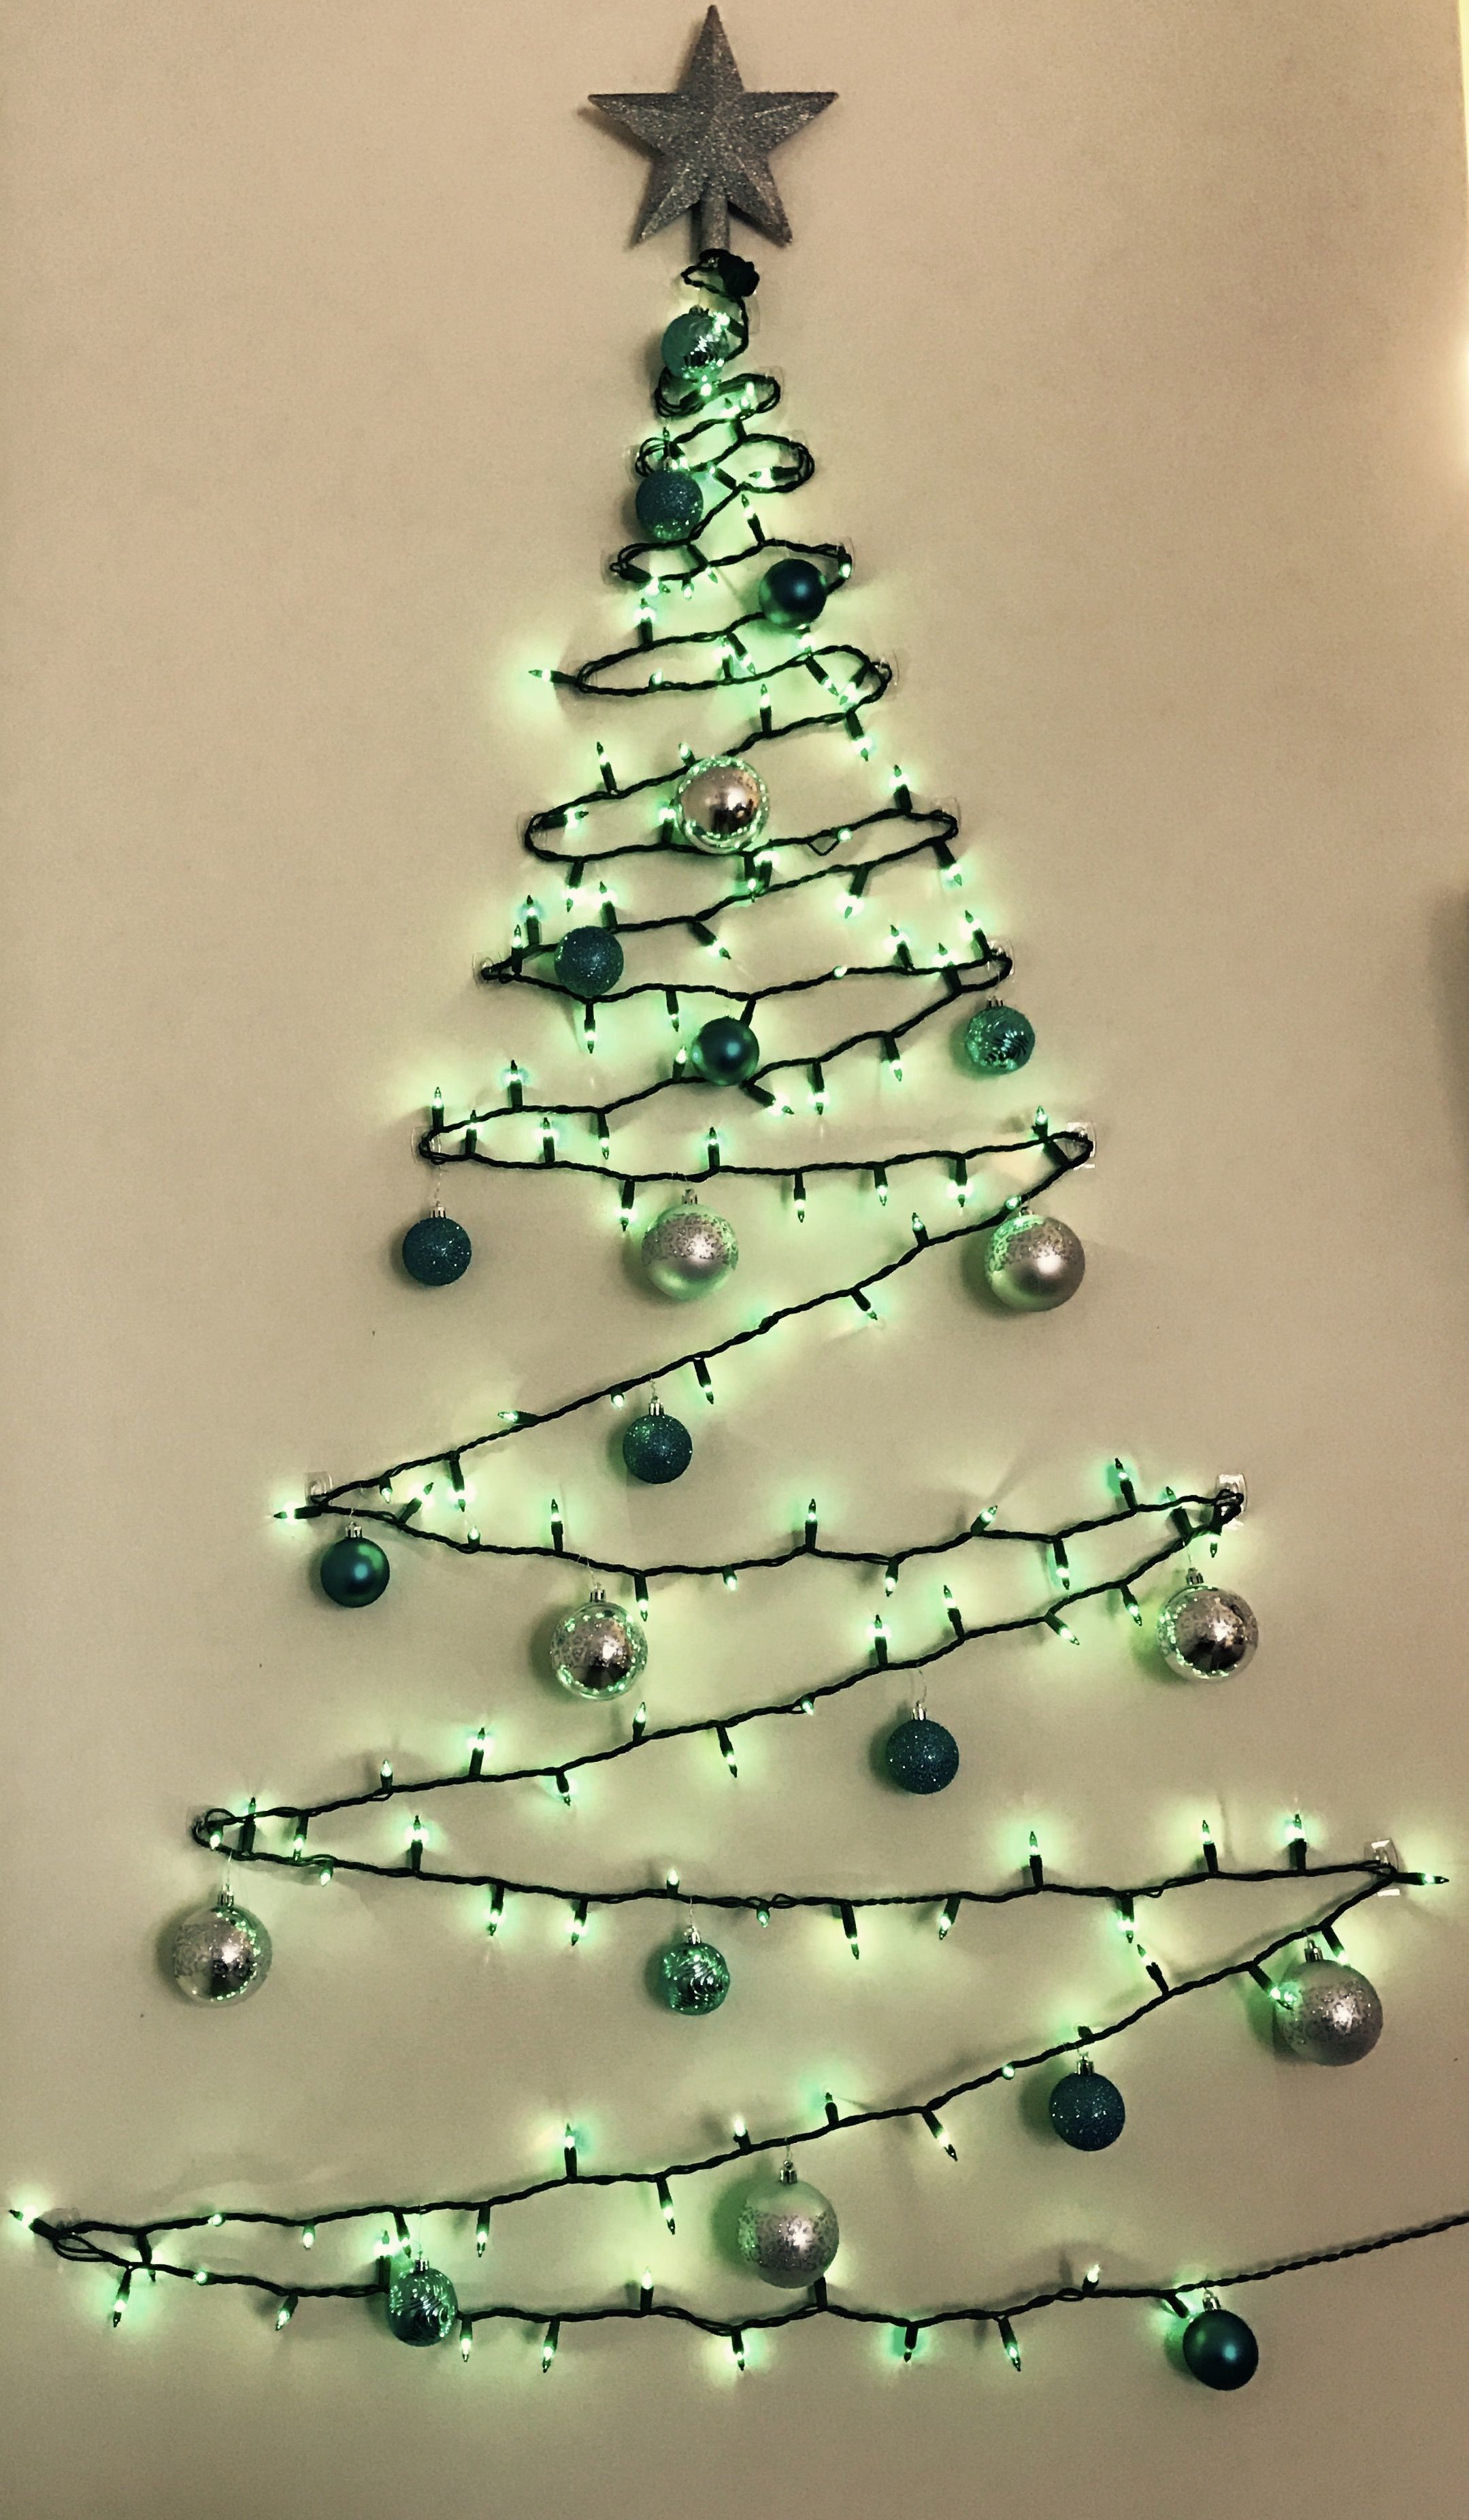 2159x3703 Full Size of Christmas: Christmas Tree Made Of Lights On Wall Street  Journal Libor Rates ...